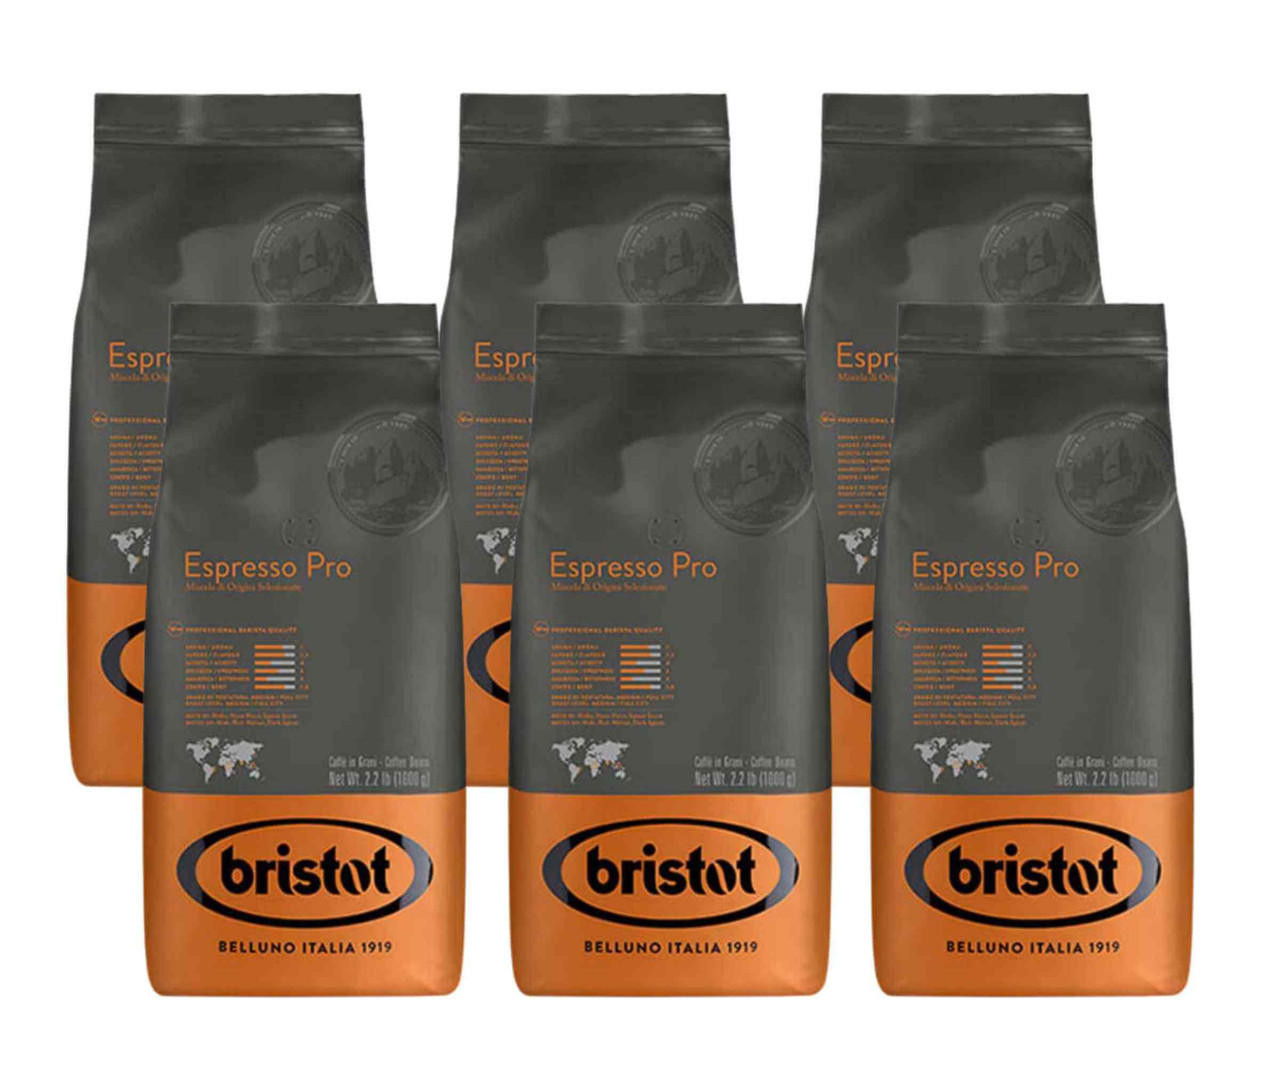  Bristot ESPRESSO PRO Medium Blend Coffee Beans - 1 Kg (2.2 lbs / 1000g) Bag (6/Case) 